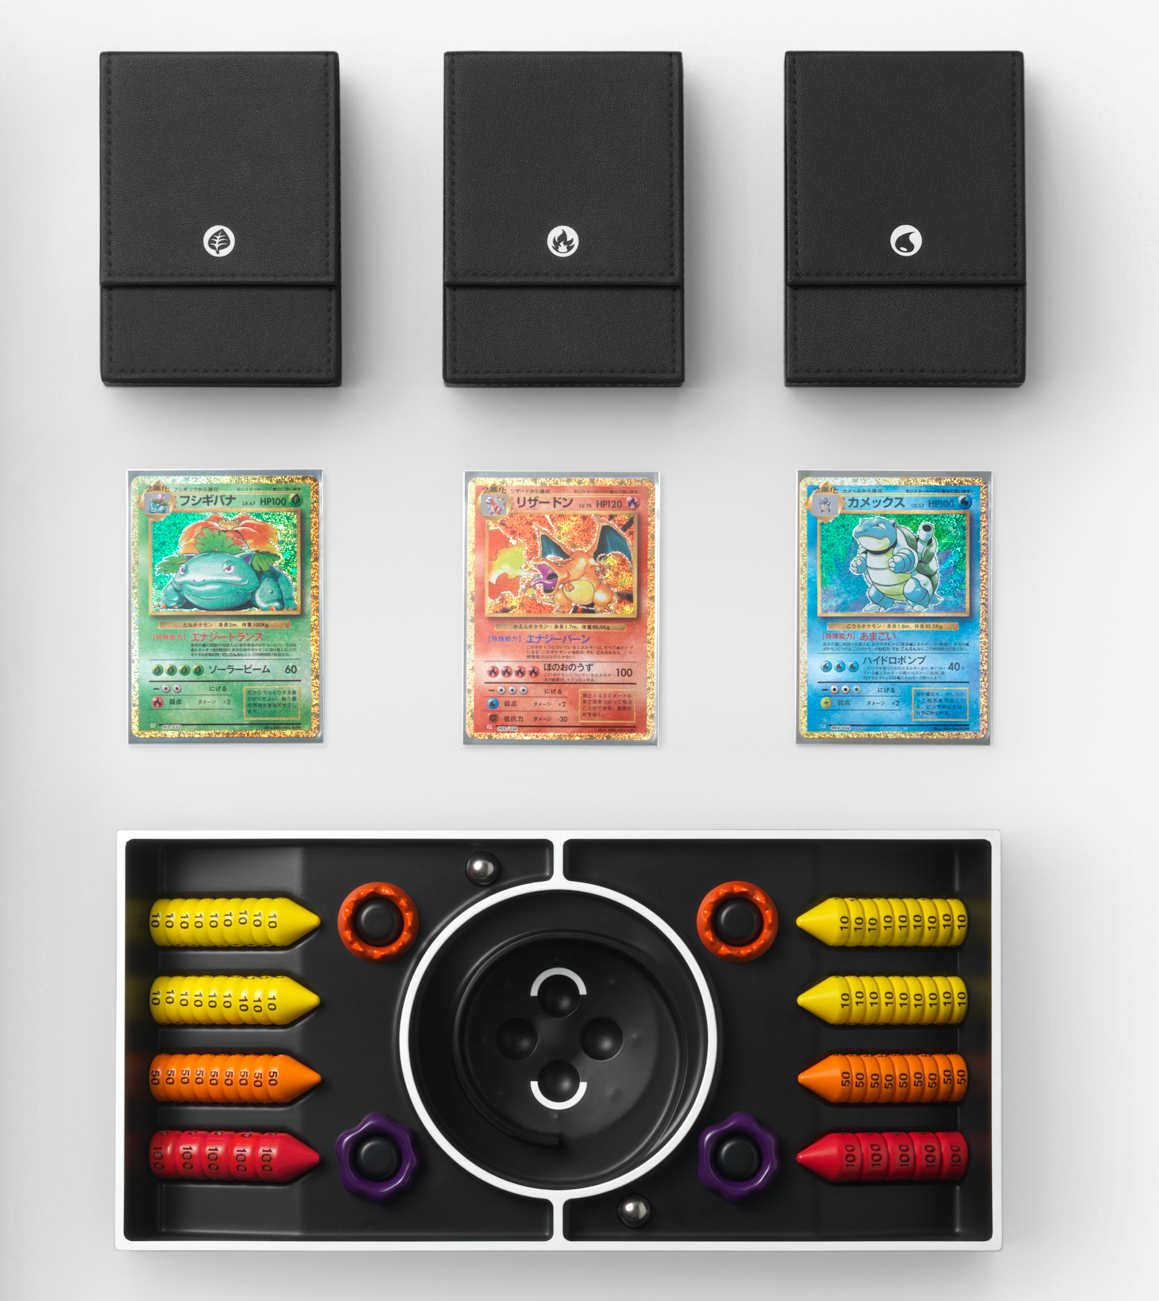 Cartes Pokémon et rétro gaming, nouvel eldorado des salles de ventes 